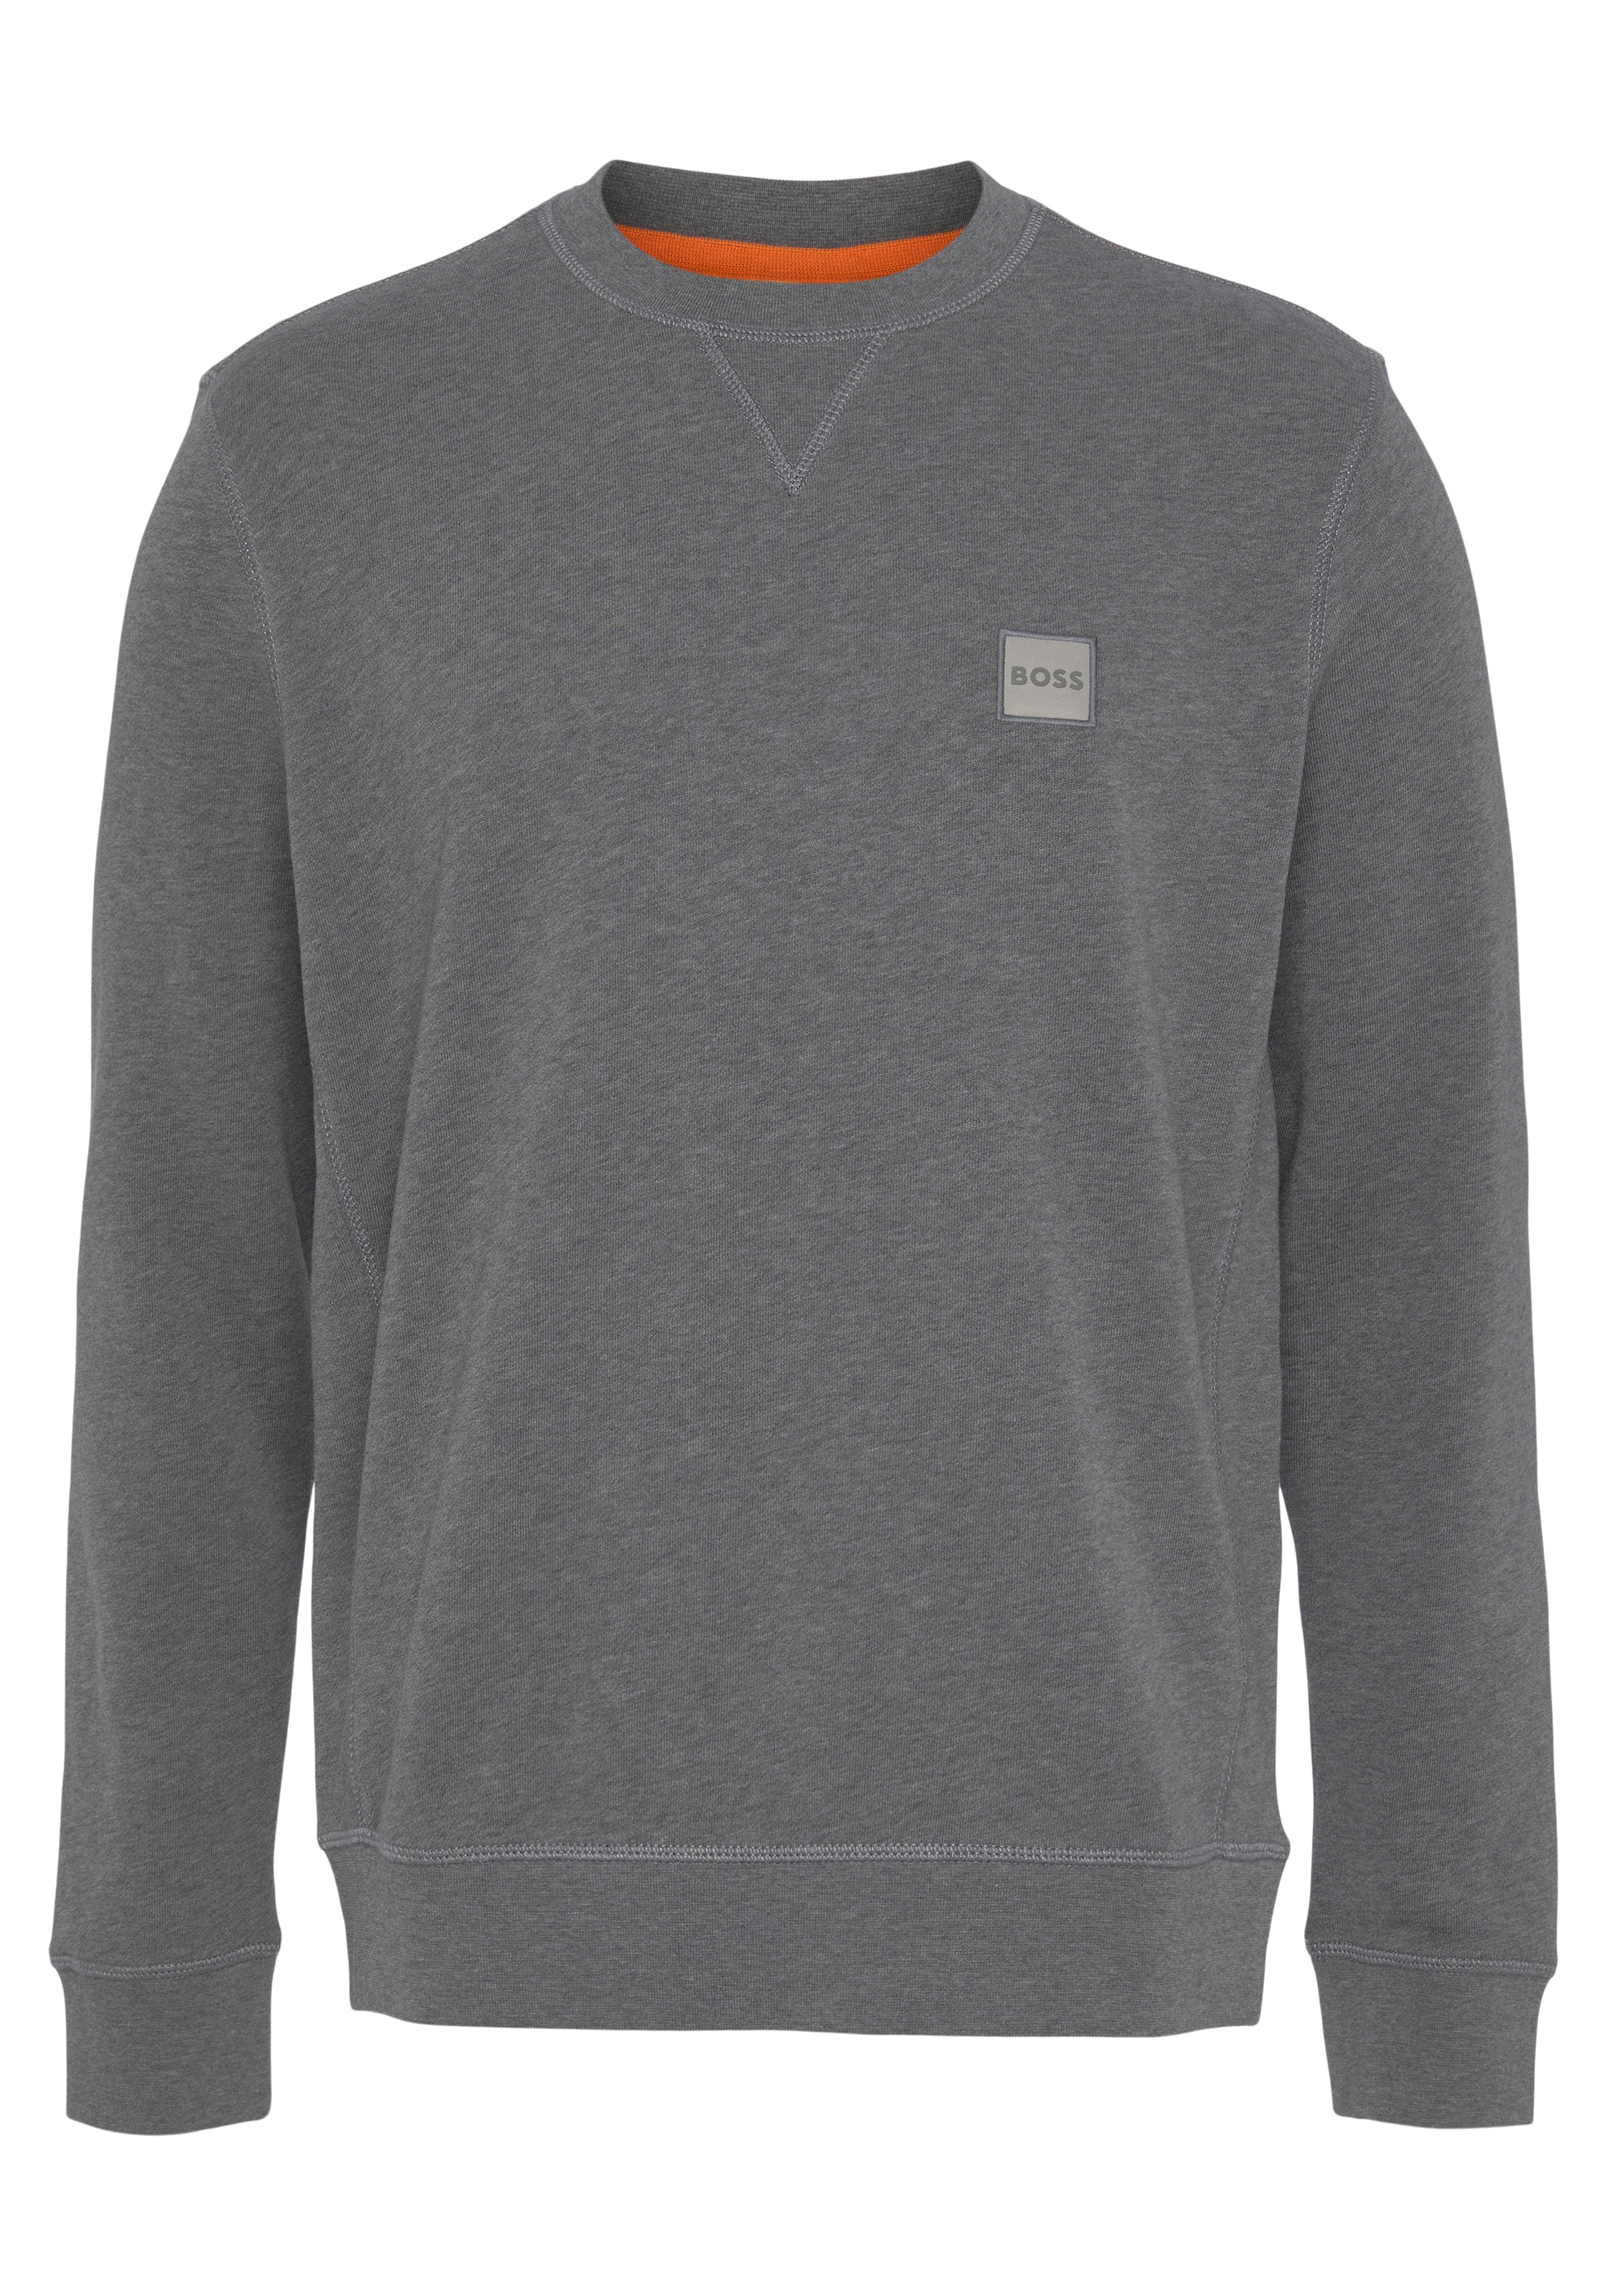 BOSS ORANGE mit shoppen BOSS online bei Logo OTTO »Westart«, aufgesticktem Sweatshirt